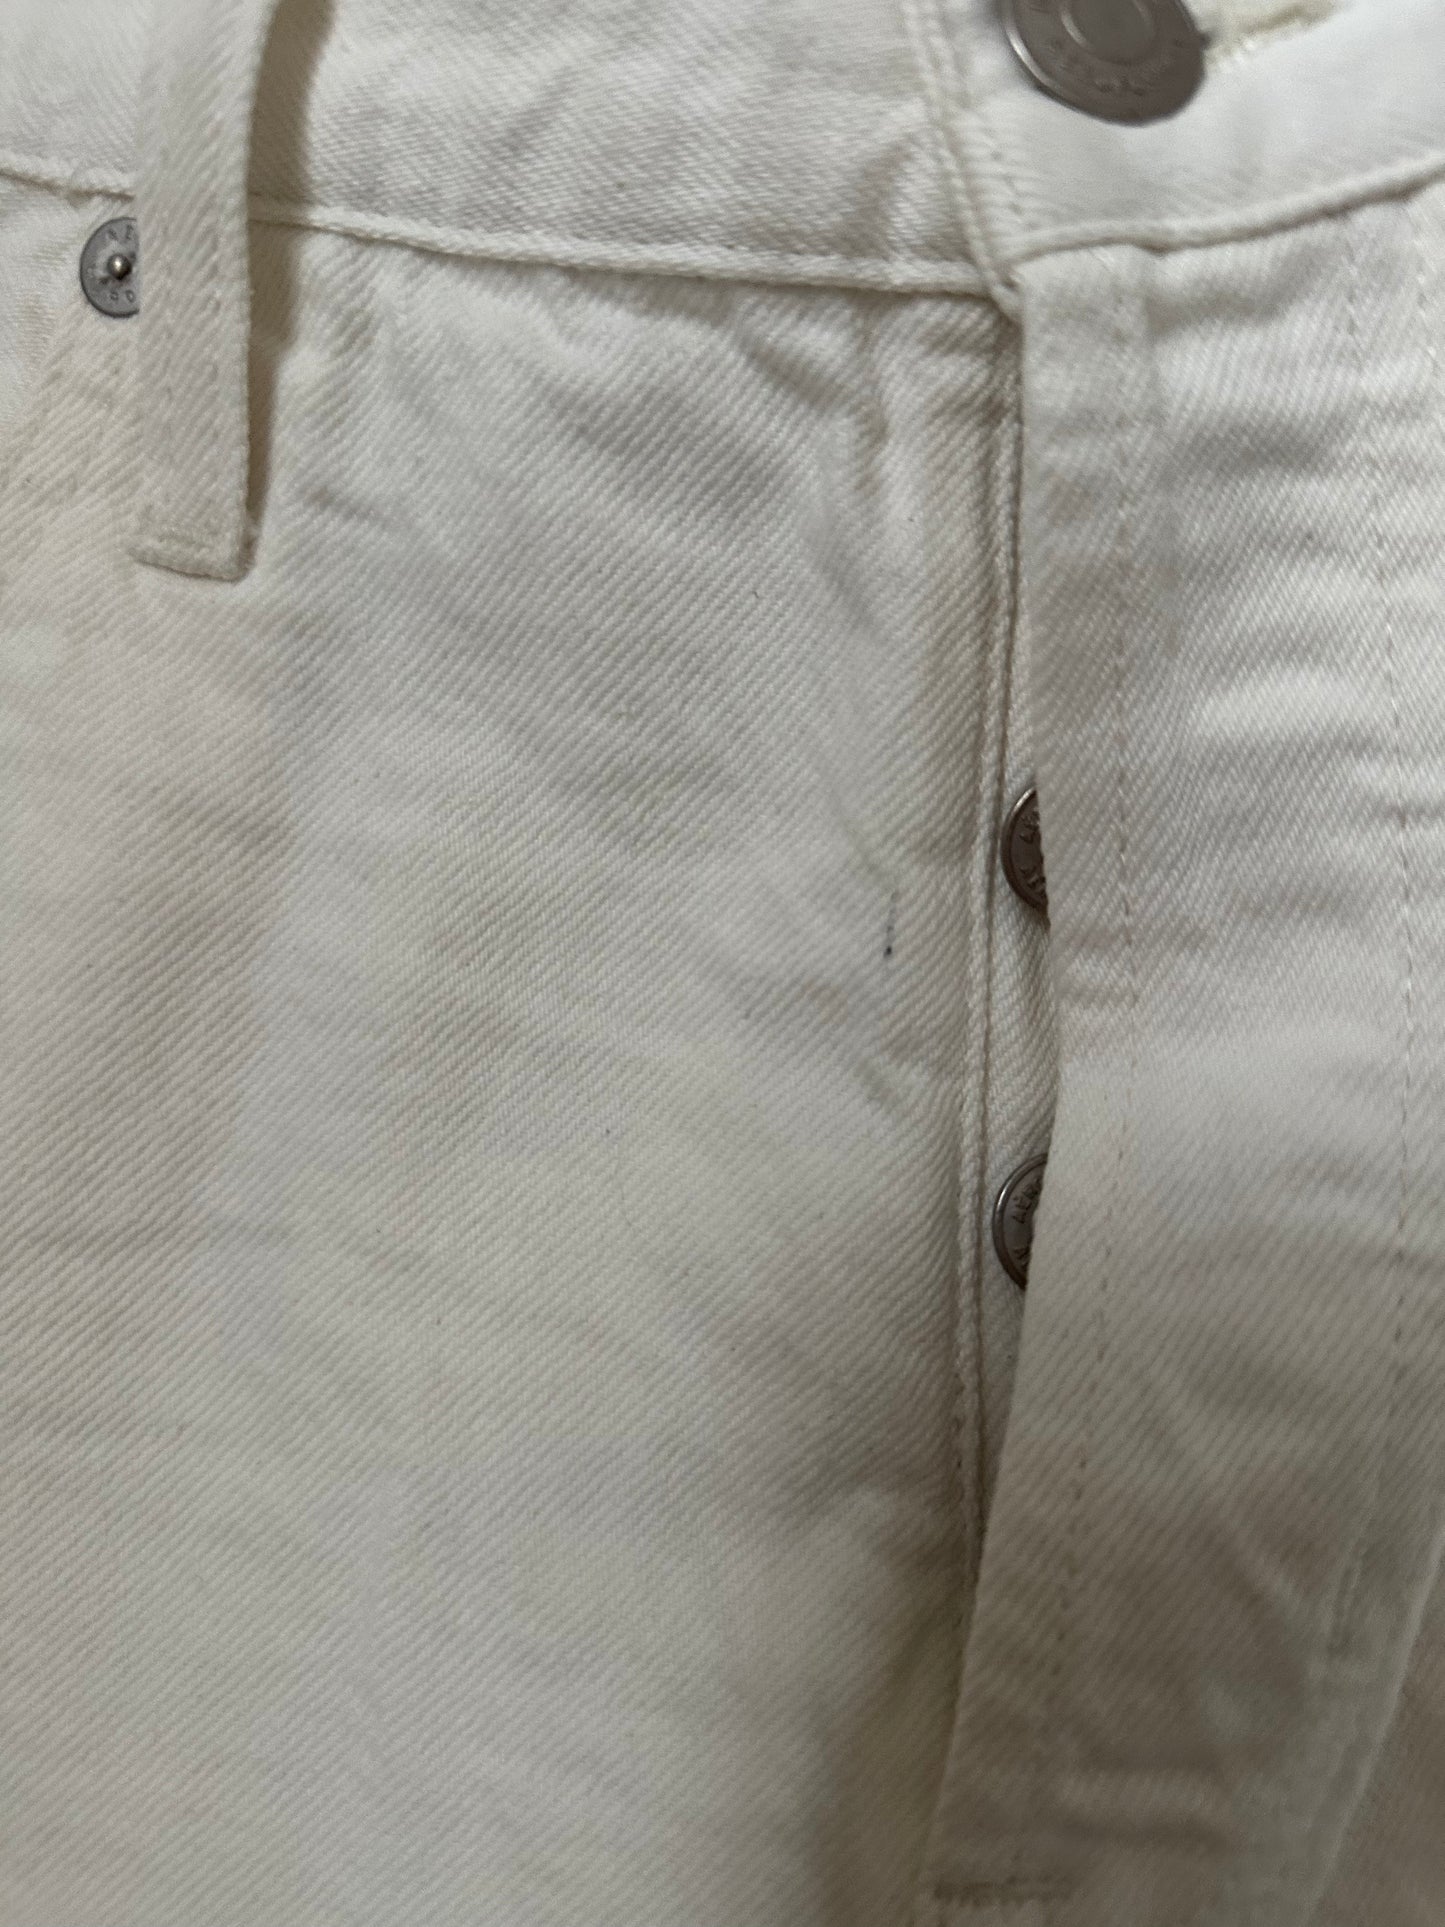 NWT Aeropostale 90's High Waist Cut-Off 4" Shorts in White, Size 8